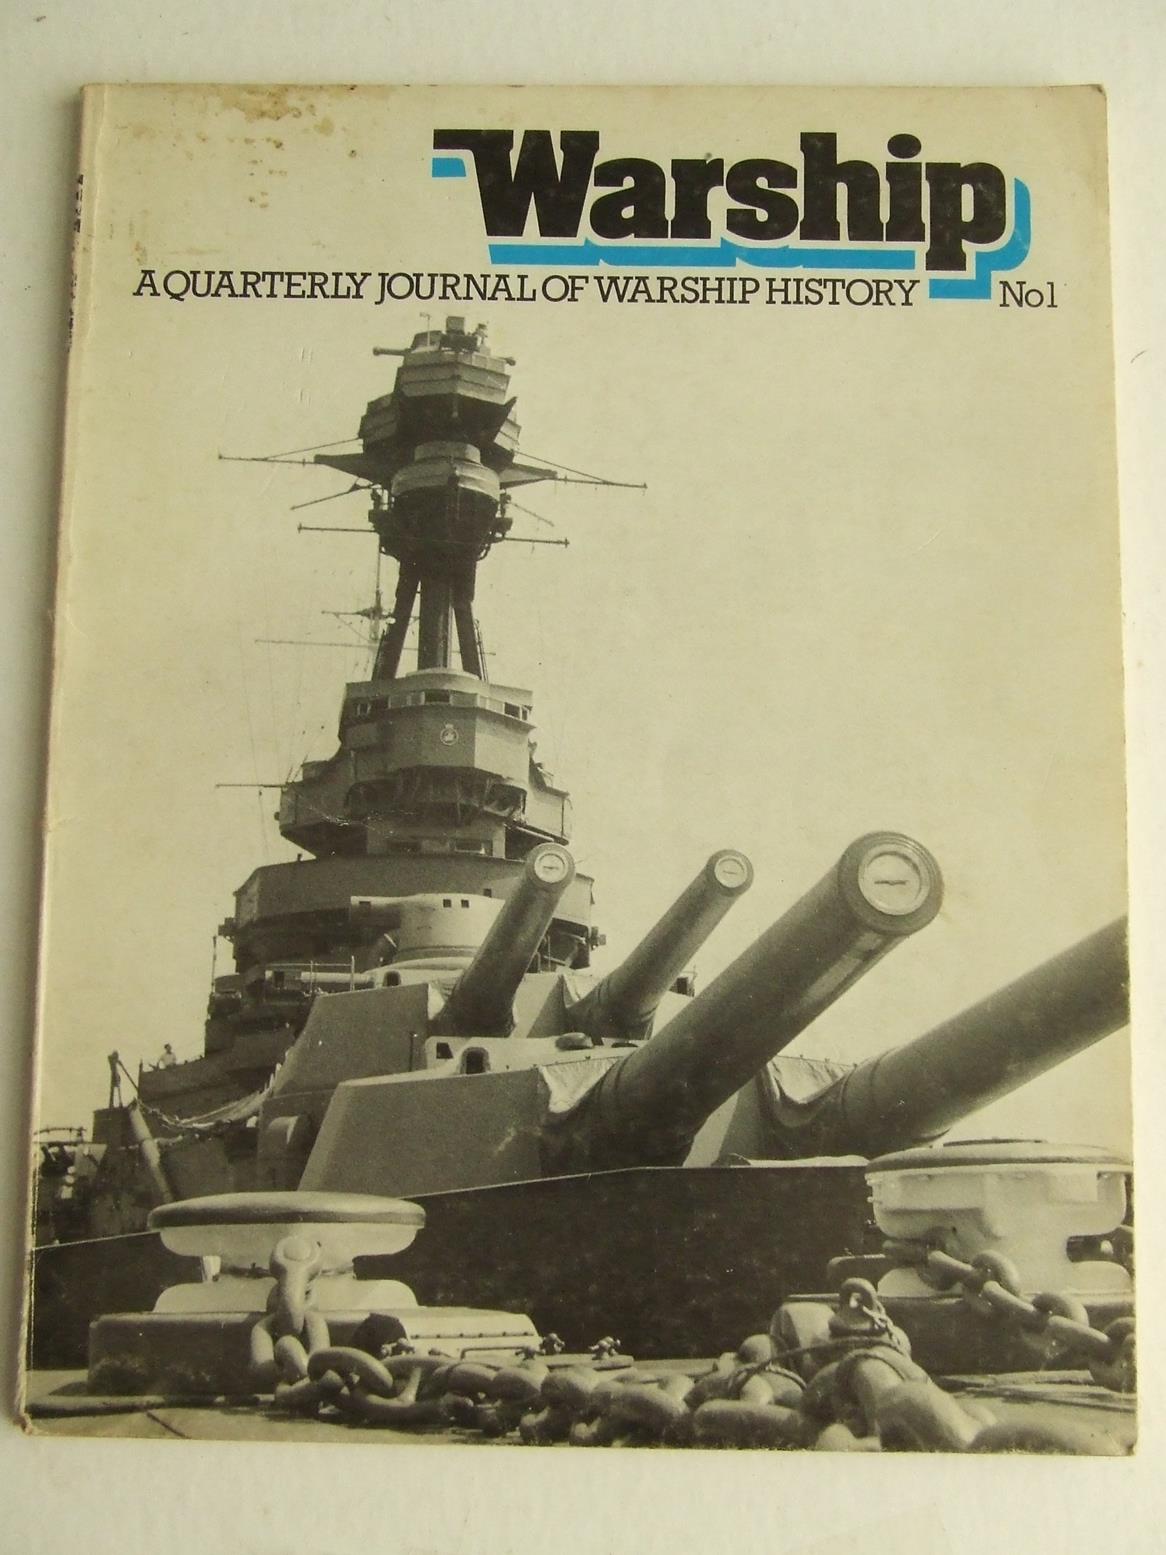 Warship, a quarterly journal of warship history no. 1. January 1977